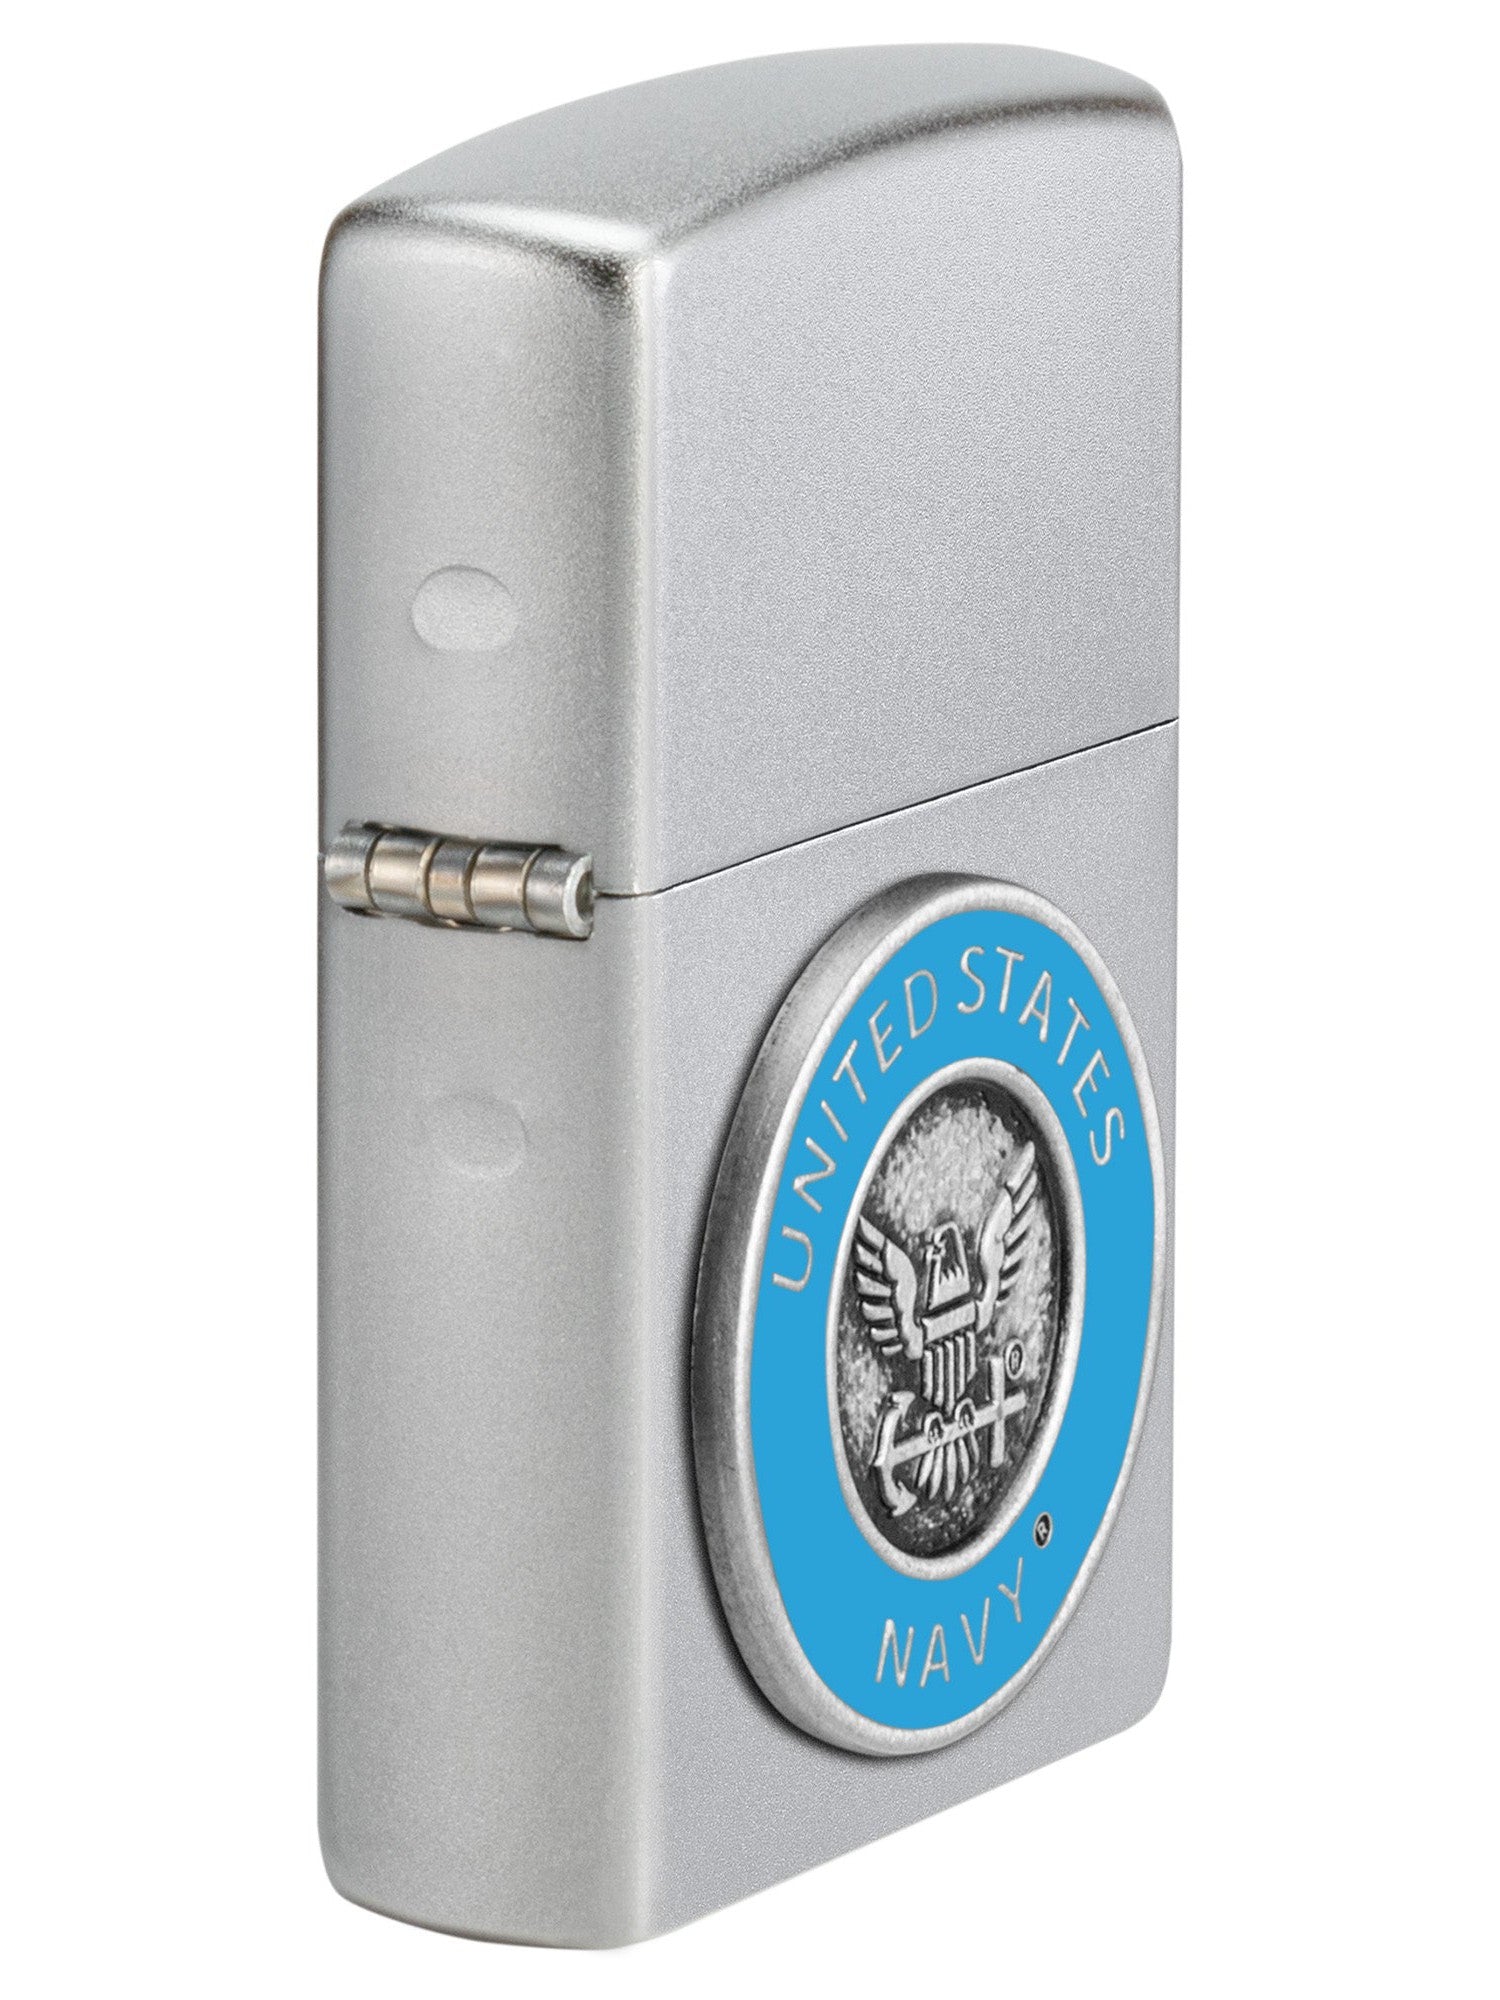 Zippo Lighter: United States Navy Emblem - Satin Chrome 48975